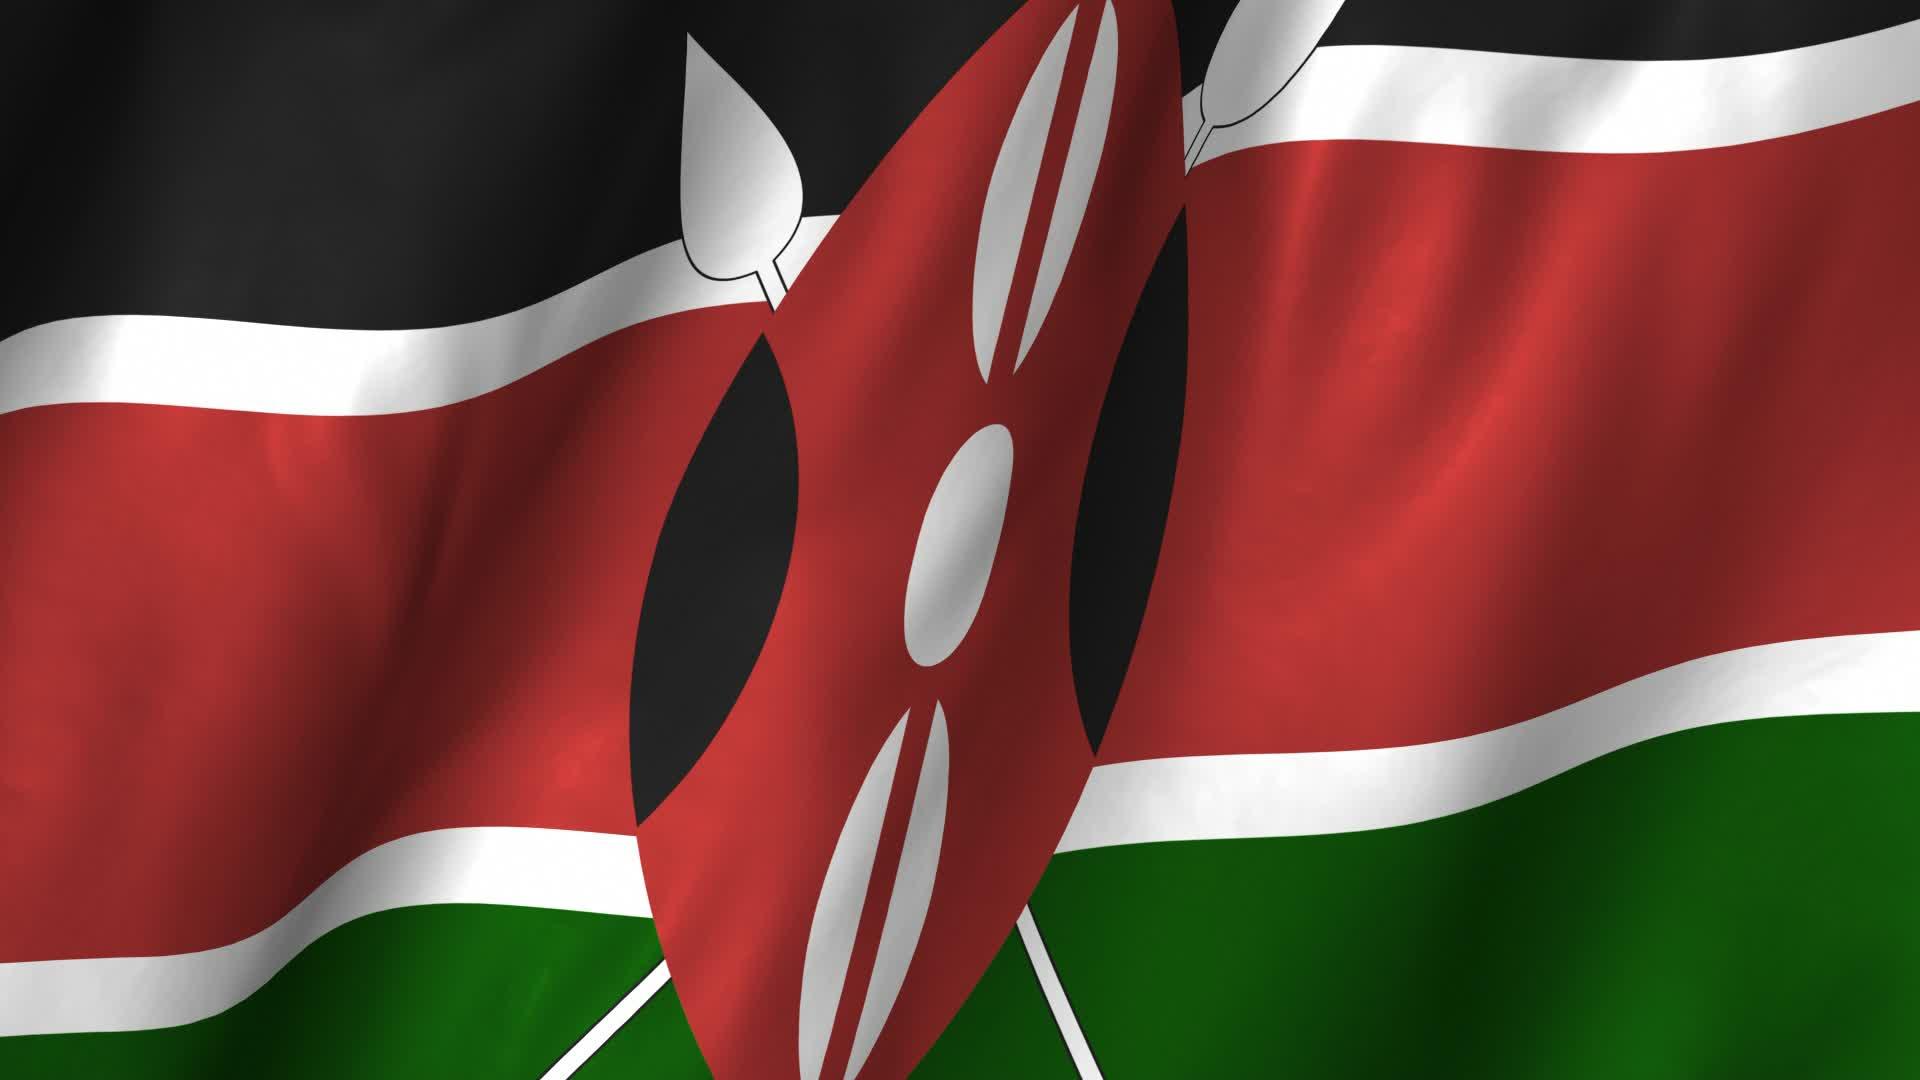 Kenya Flag HD Image Picture Of Flag Imageco.Org